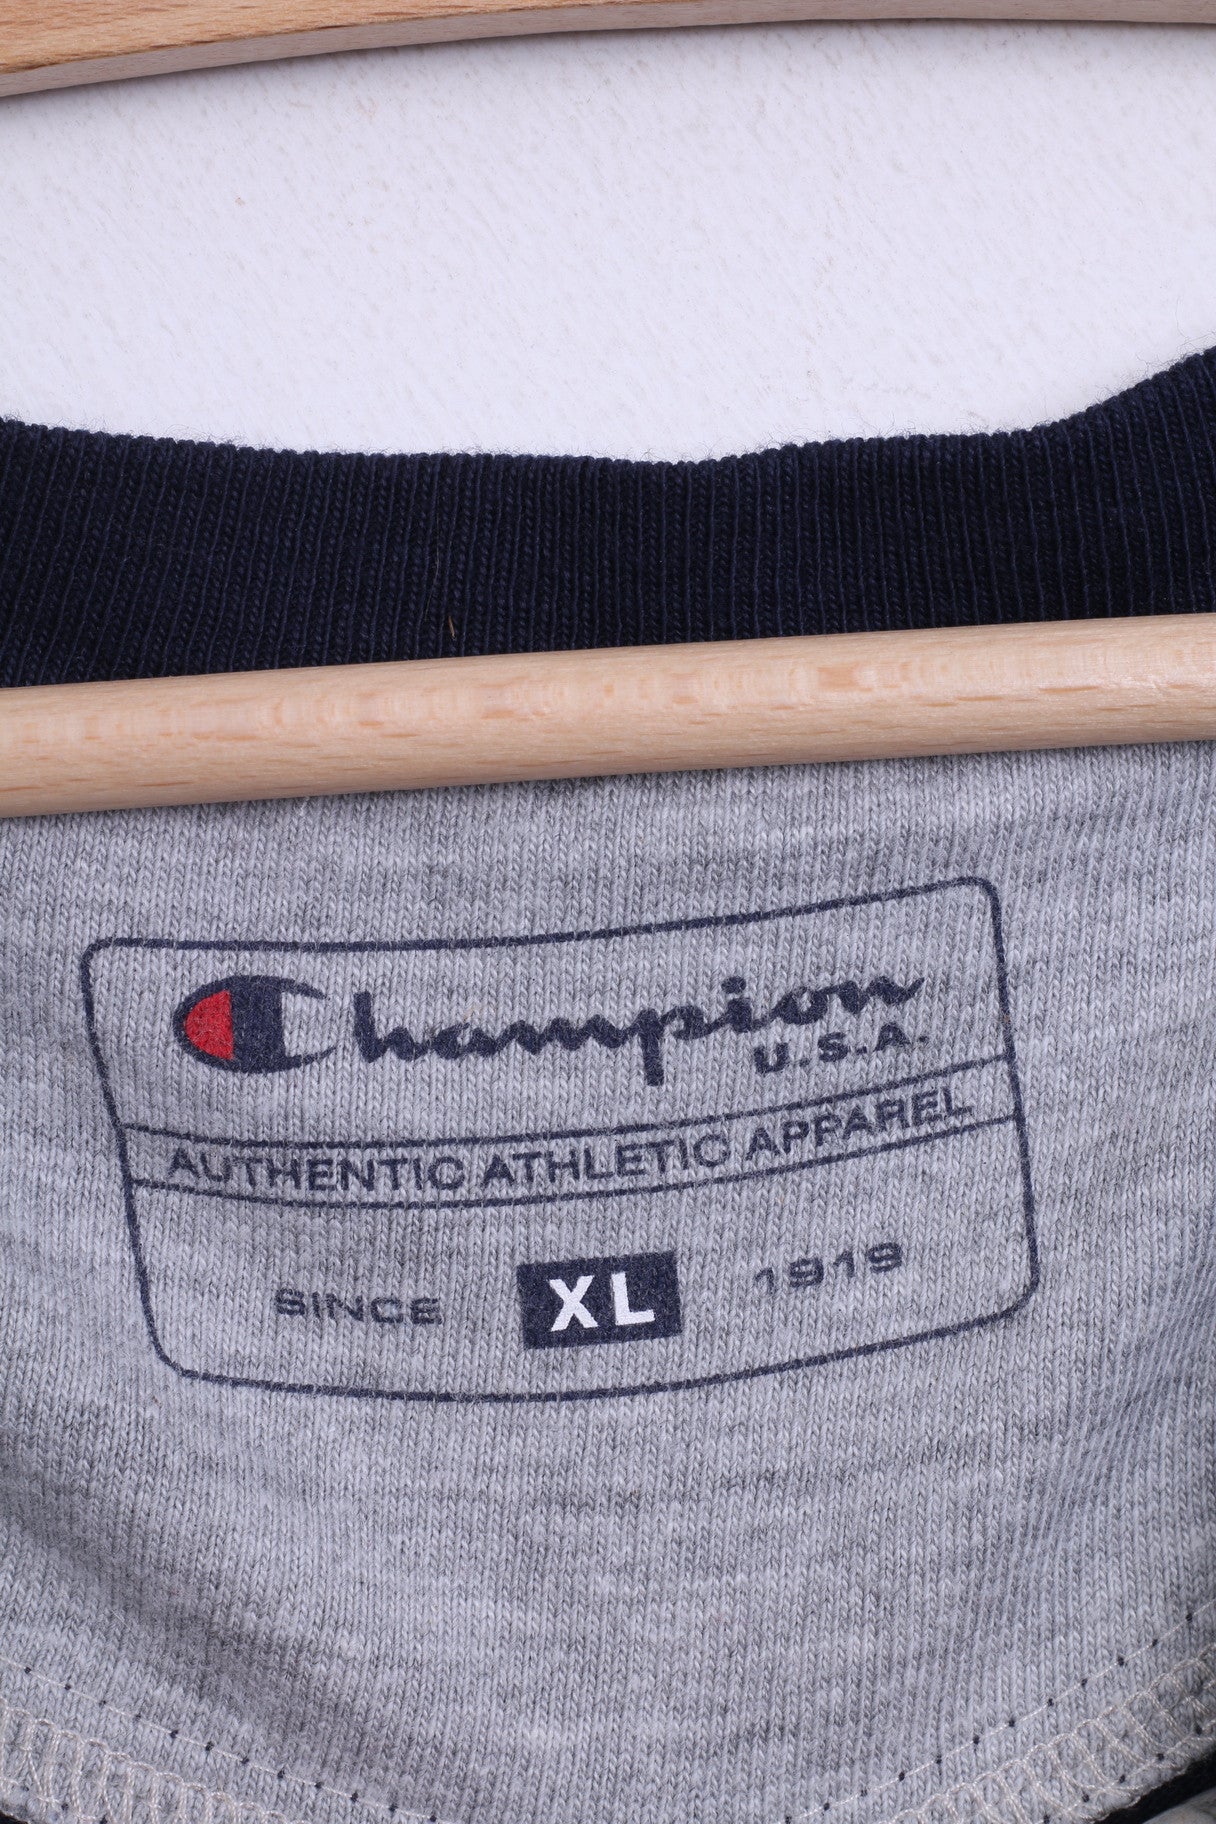 Champion Mens XL Shirt V Neck Navy Long Sleeve Cotton Top - RetrospectClothes